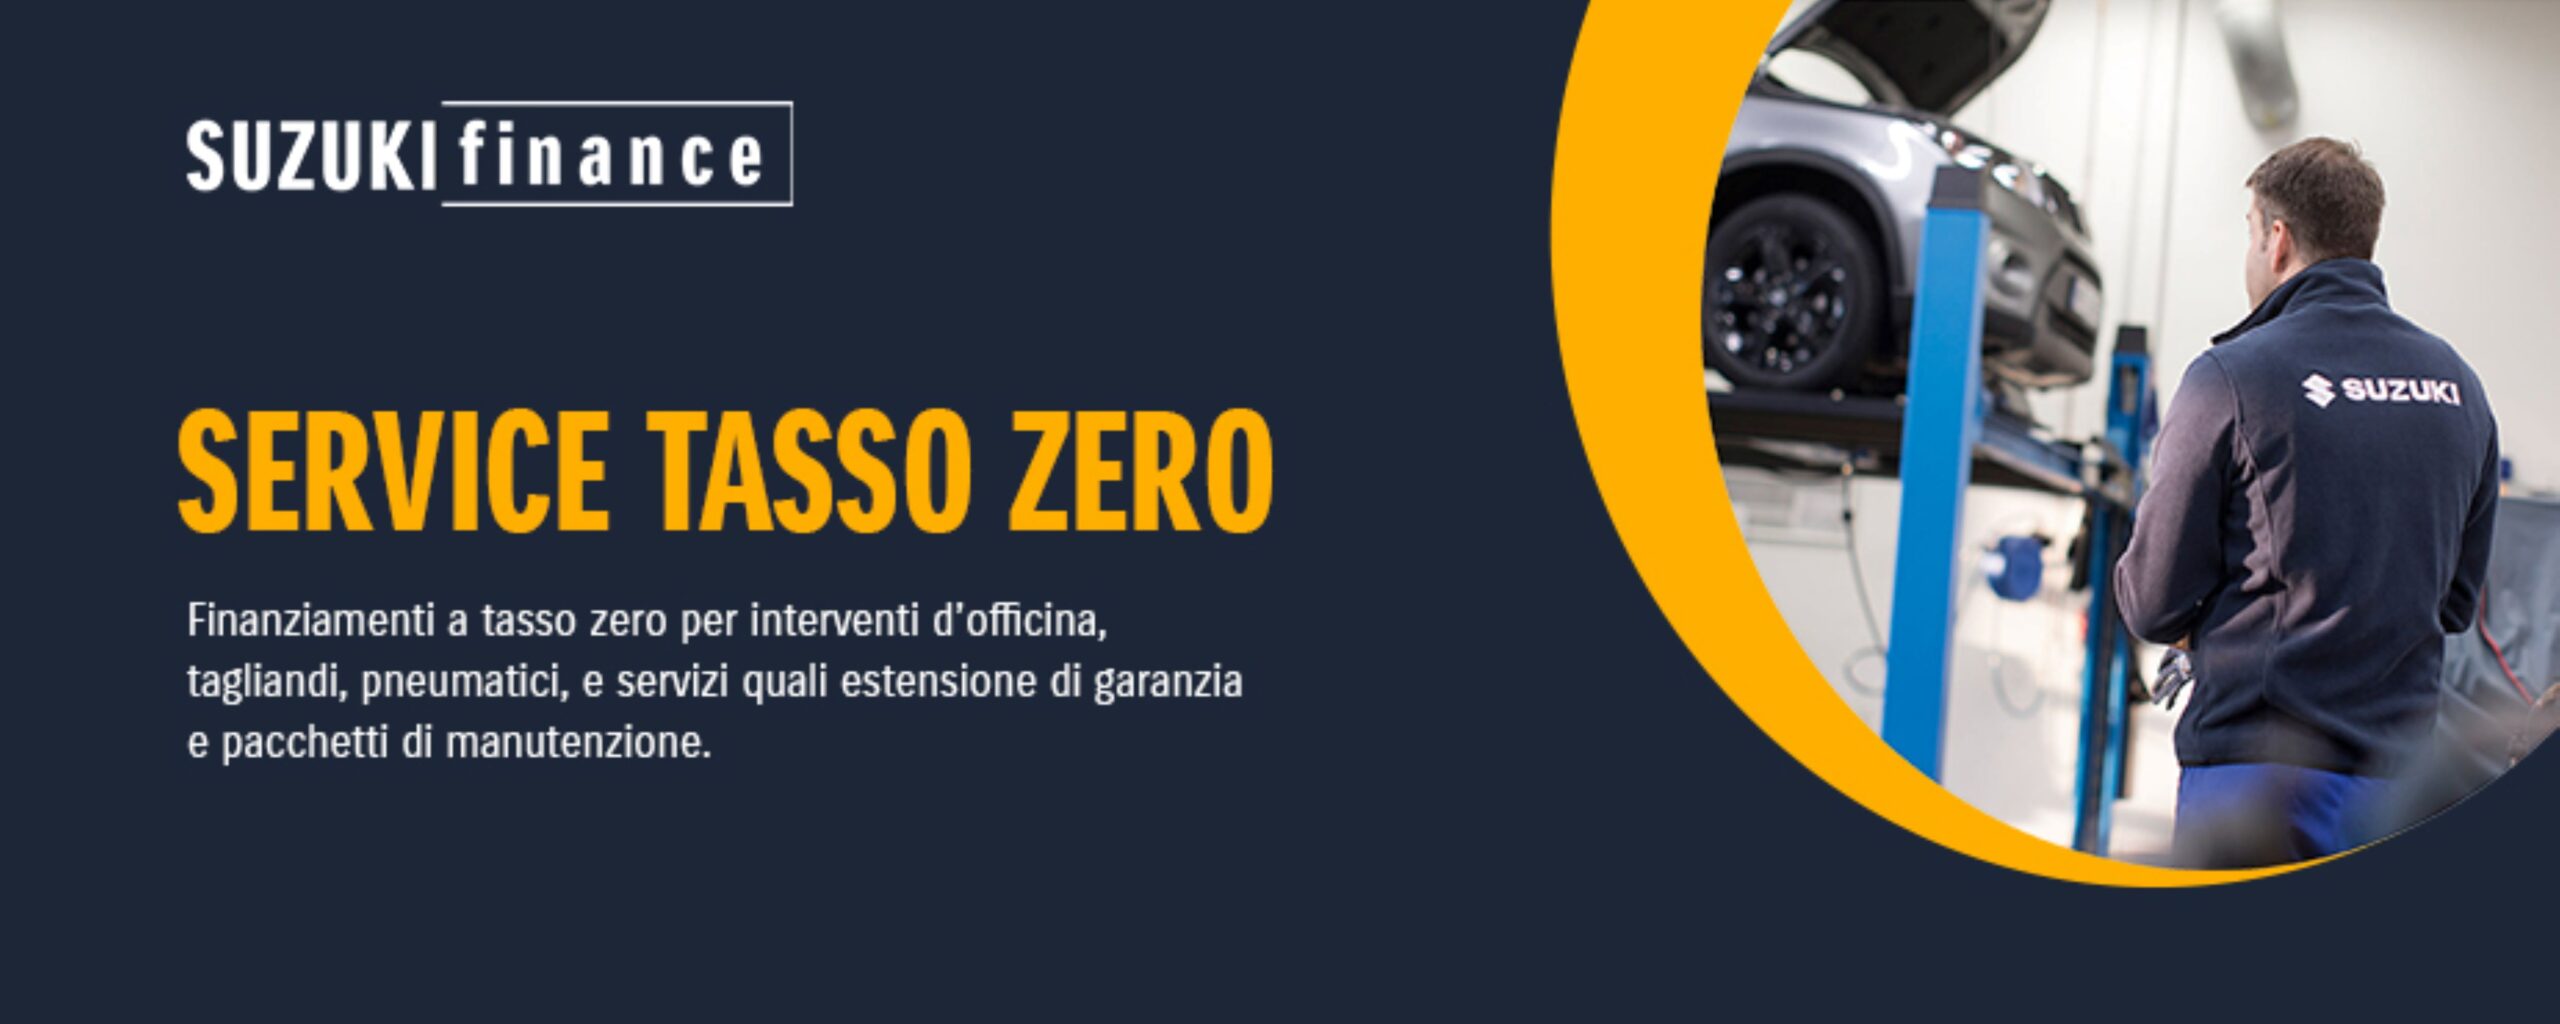 service-tasso-zero-925x370